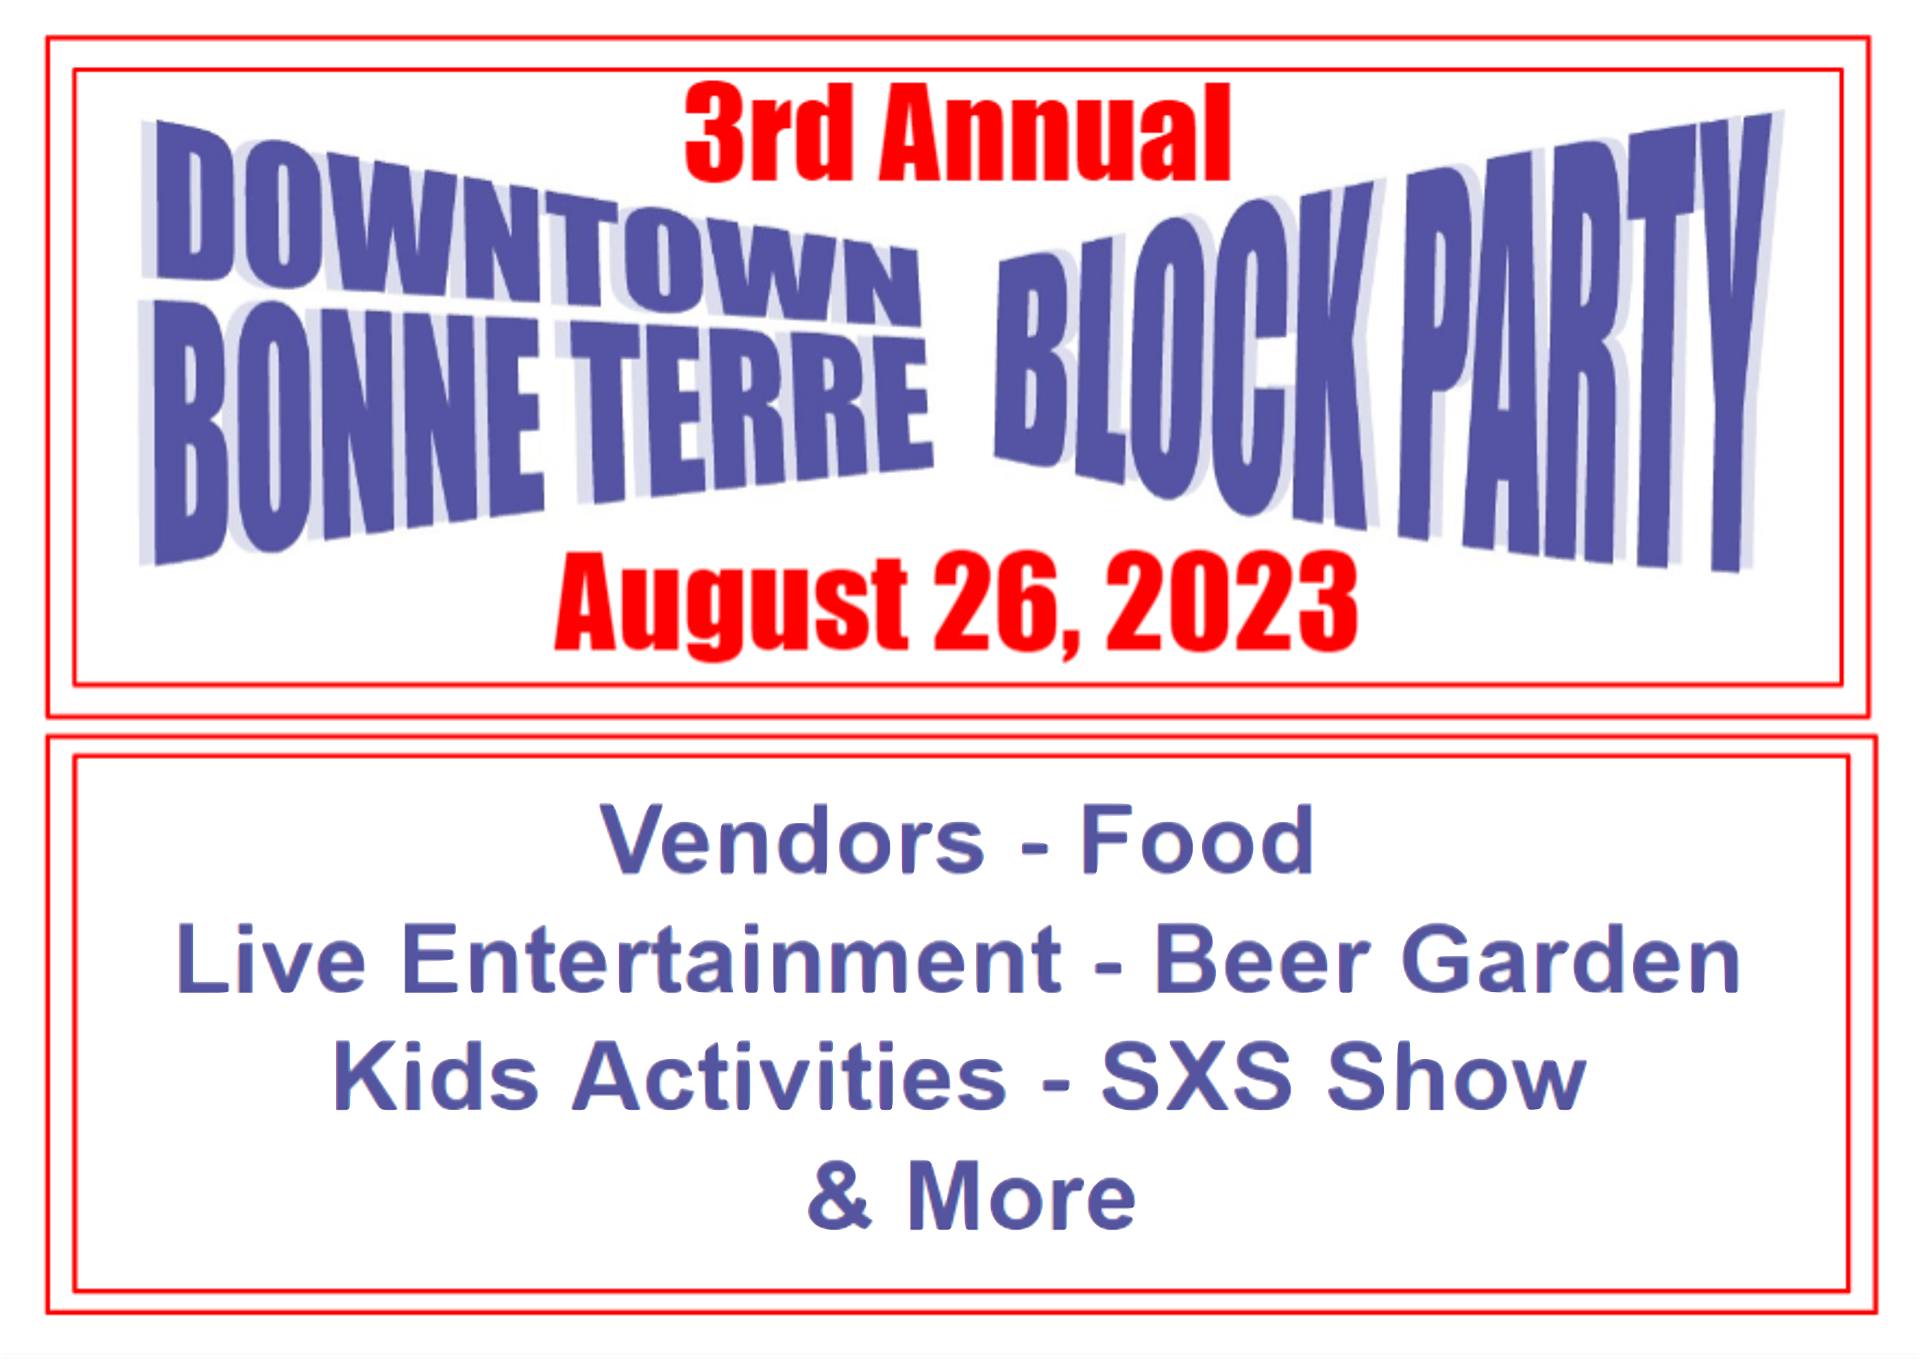 Bonne Terre Block Party Fun For Family